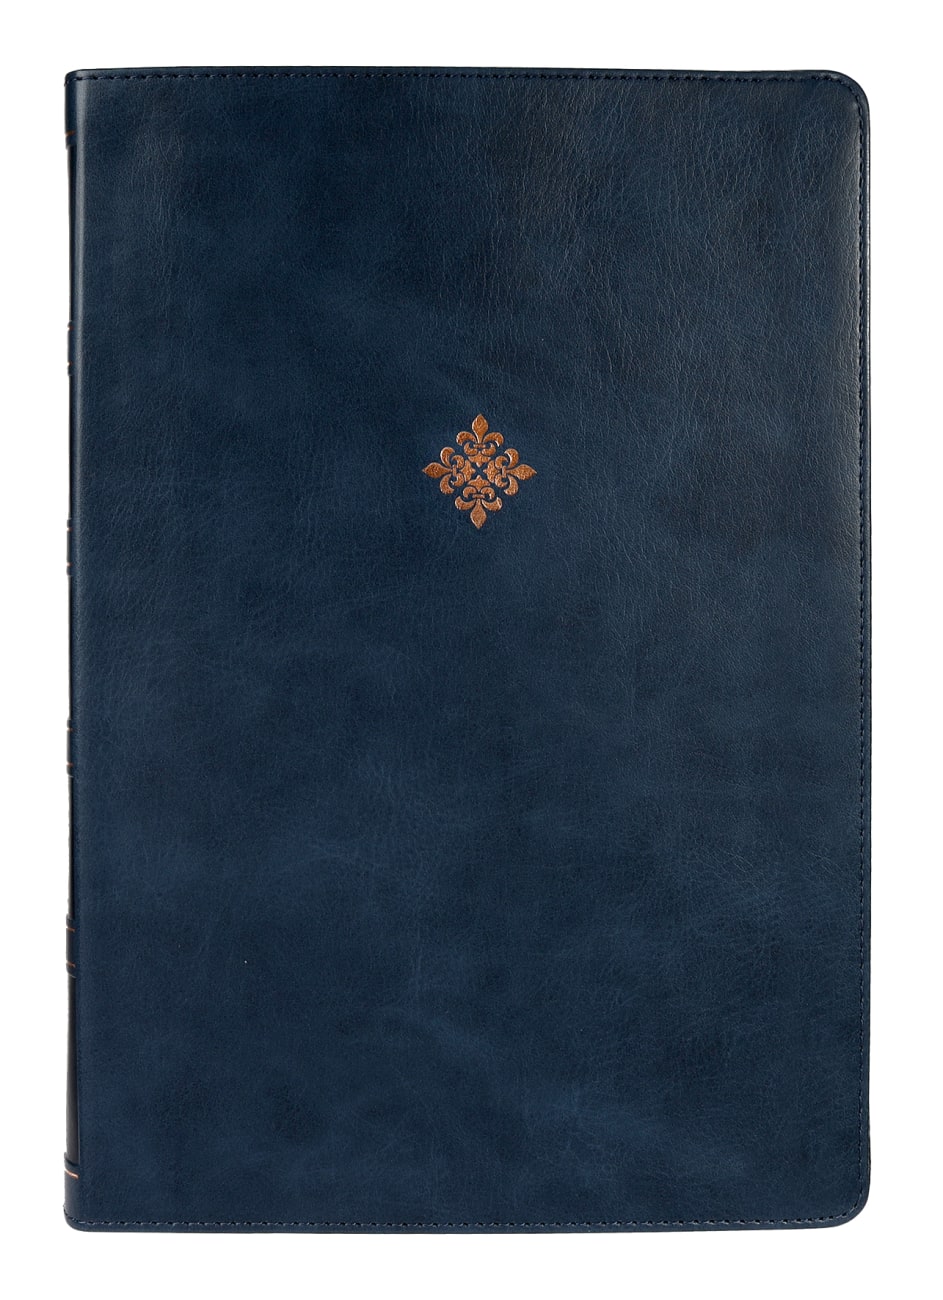 NKJV Reference Bible Super Giant Print Blue (Red Letter Edition) Premium Imitation Leather